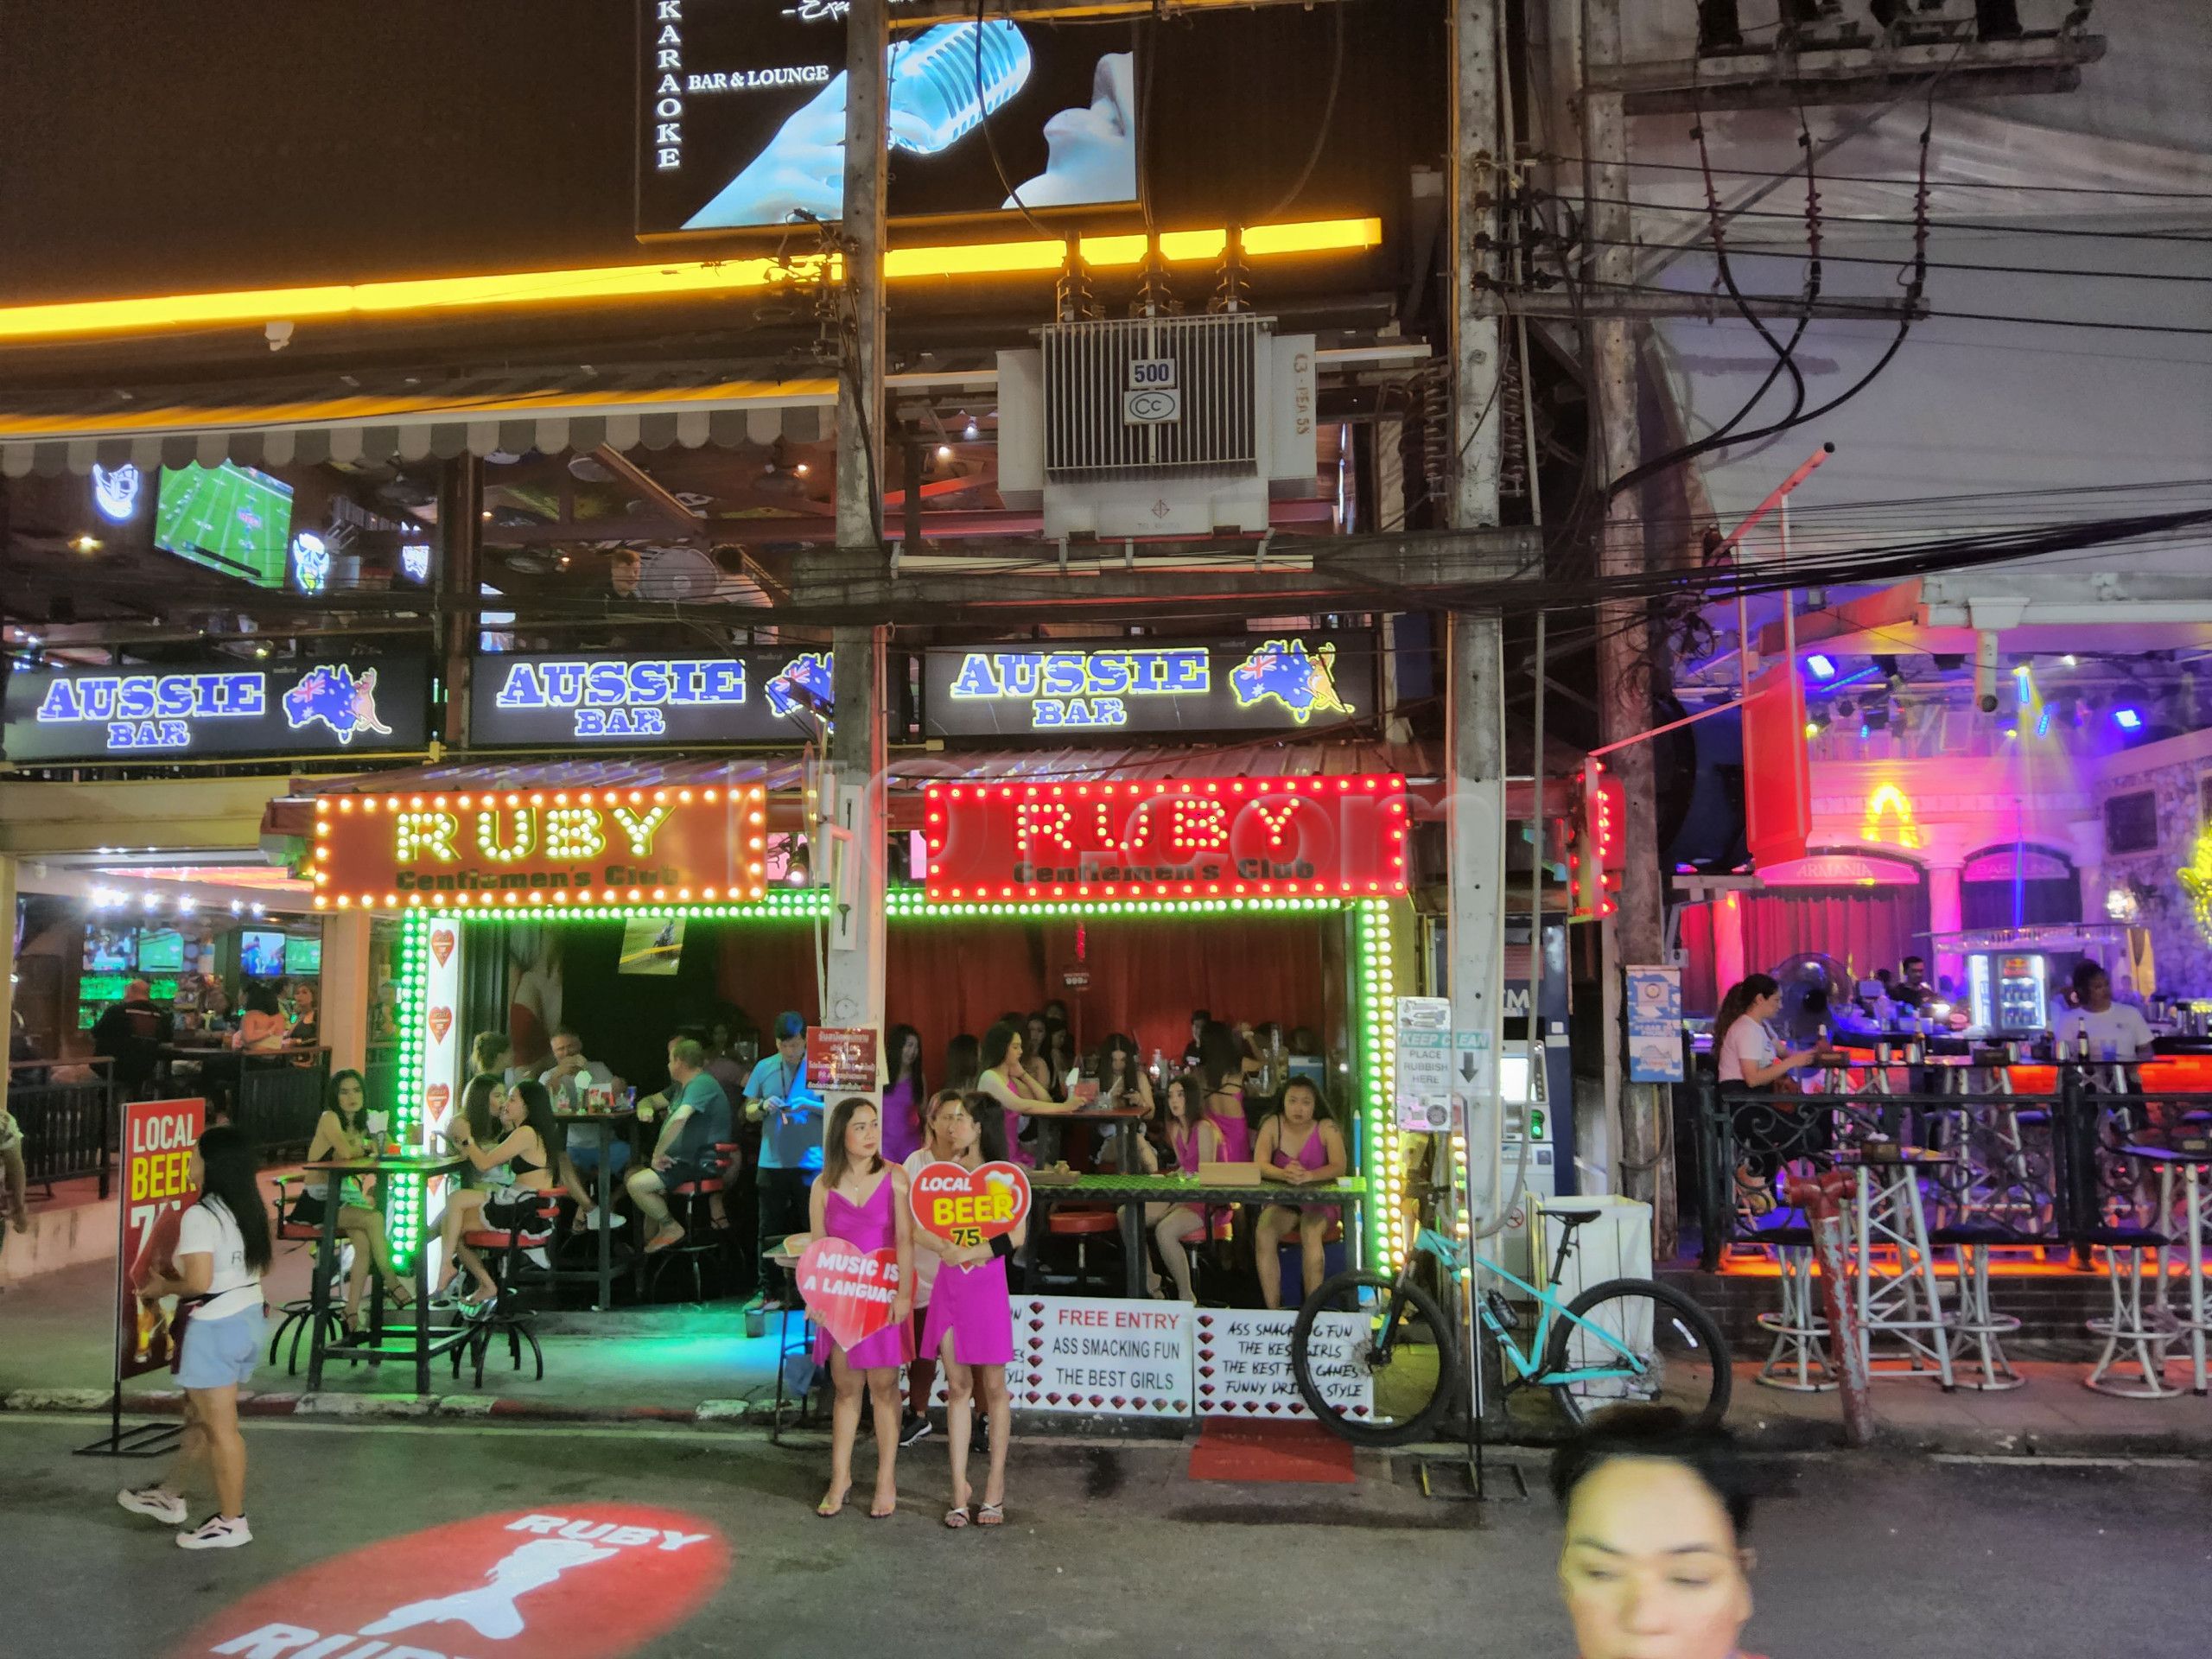 Patong, Thailand Ruby Gentlemens Club